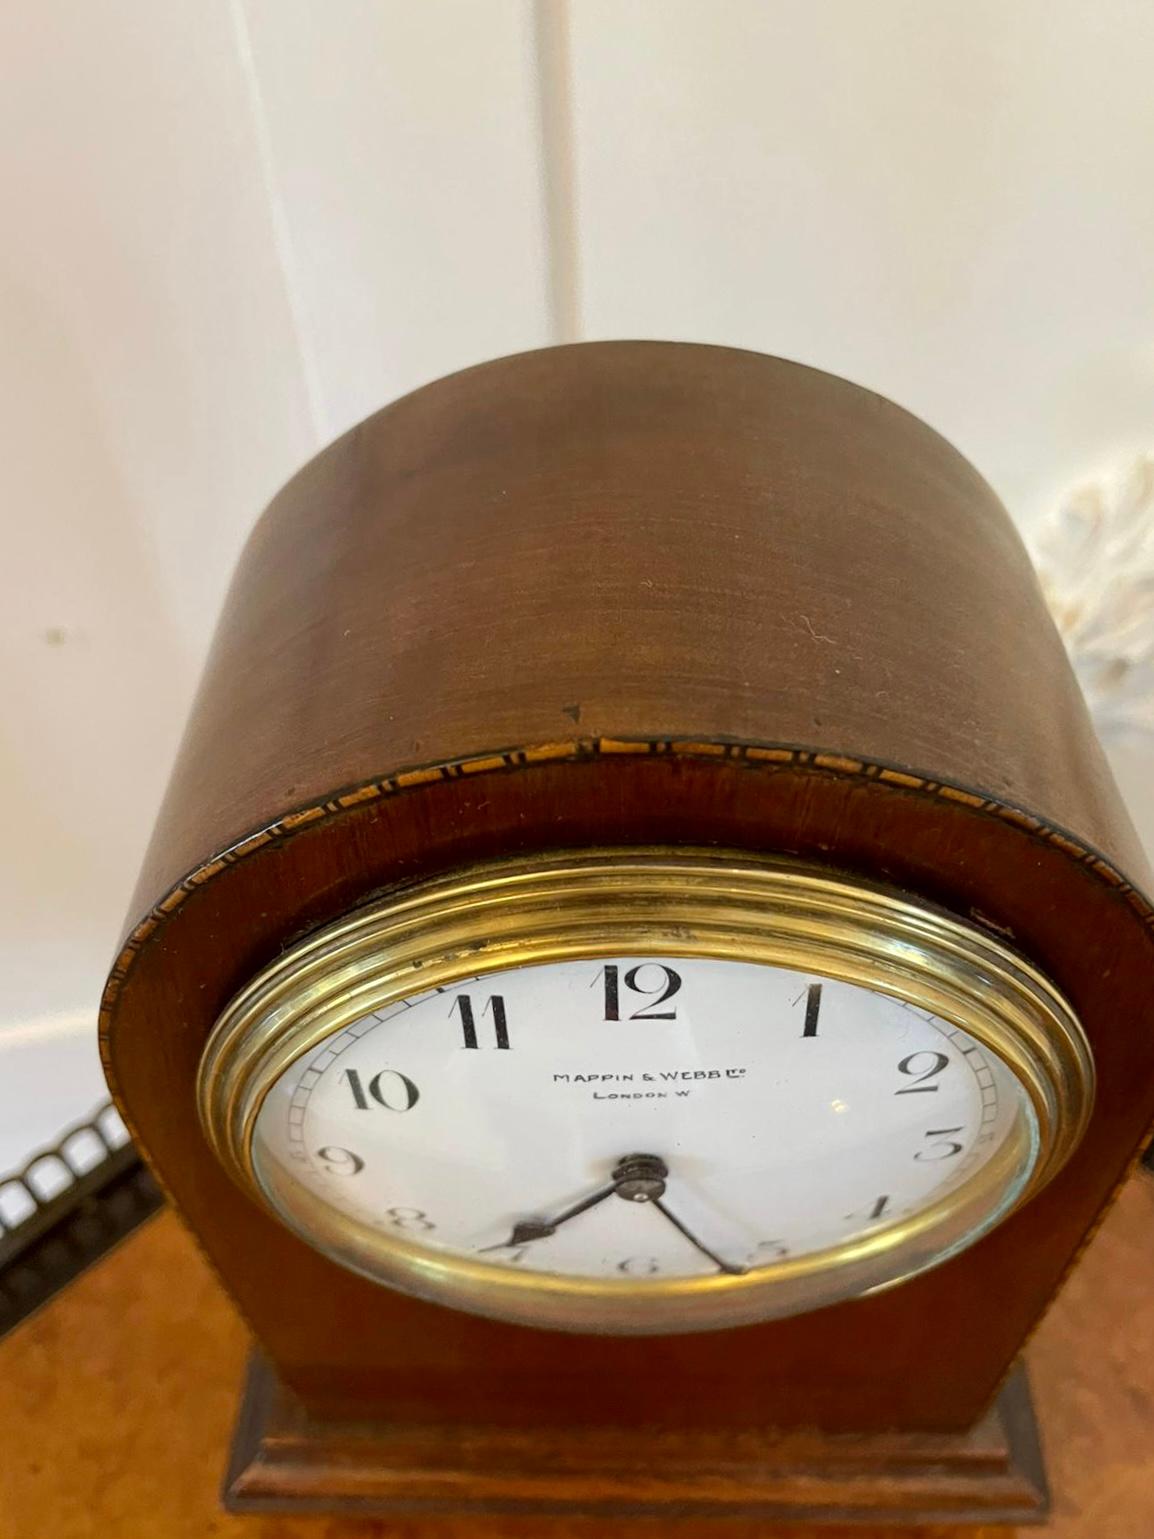 English Quality Antique Inlaid Mahogany Mantel Clock by Mappin & Webb, London